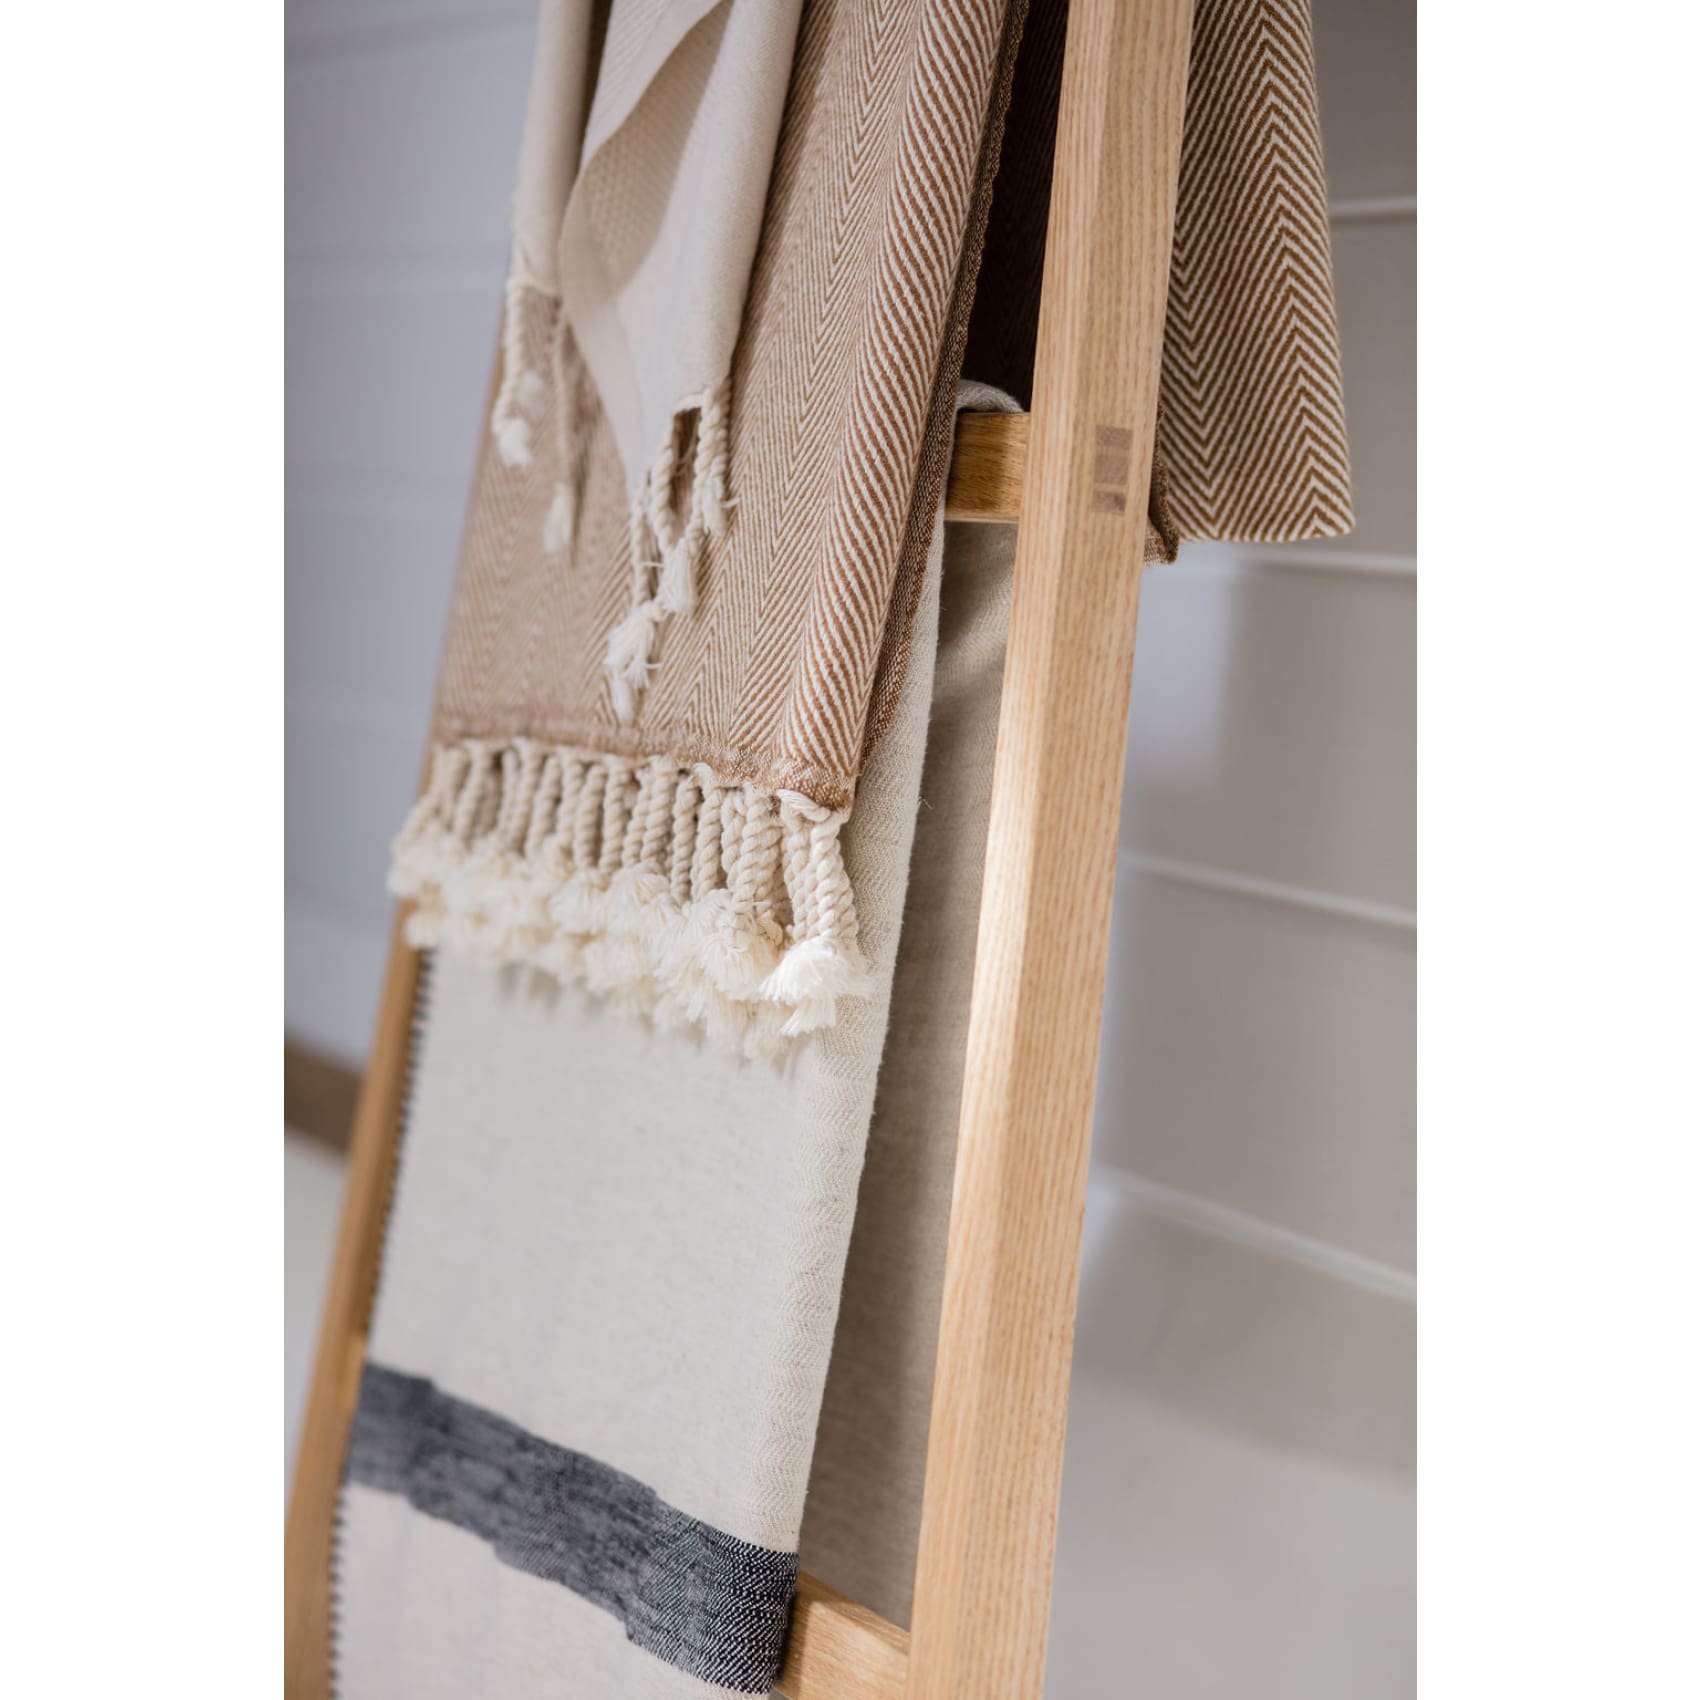 Cora Firth - Handmade Towel & Throw Ladder in Ash or Oak